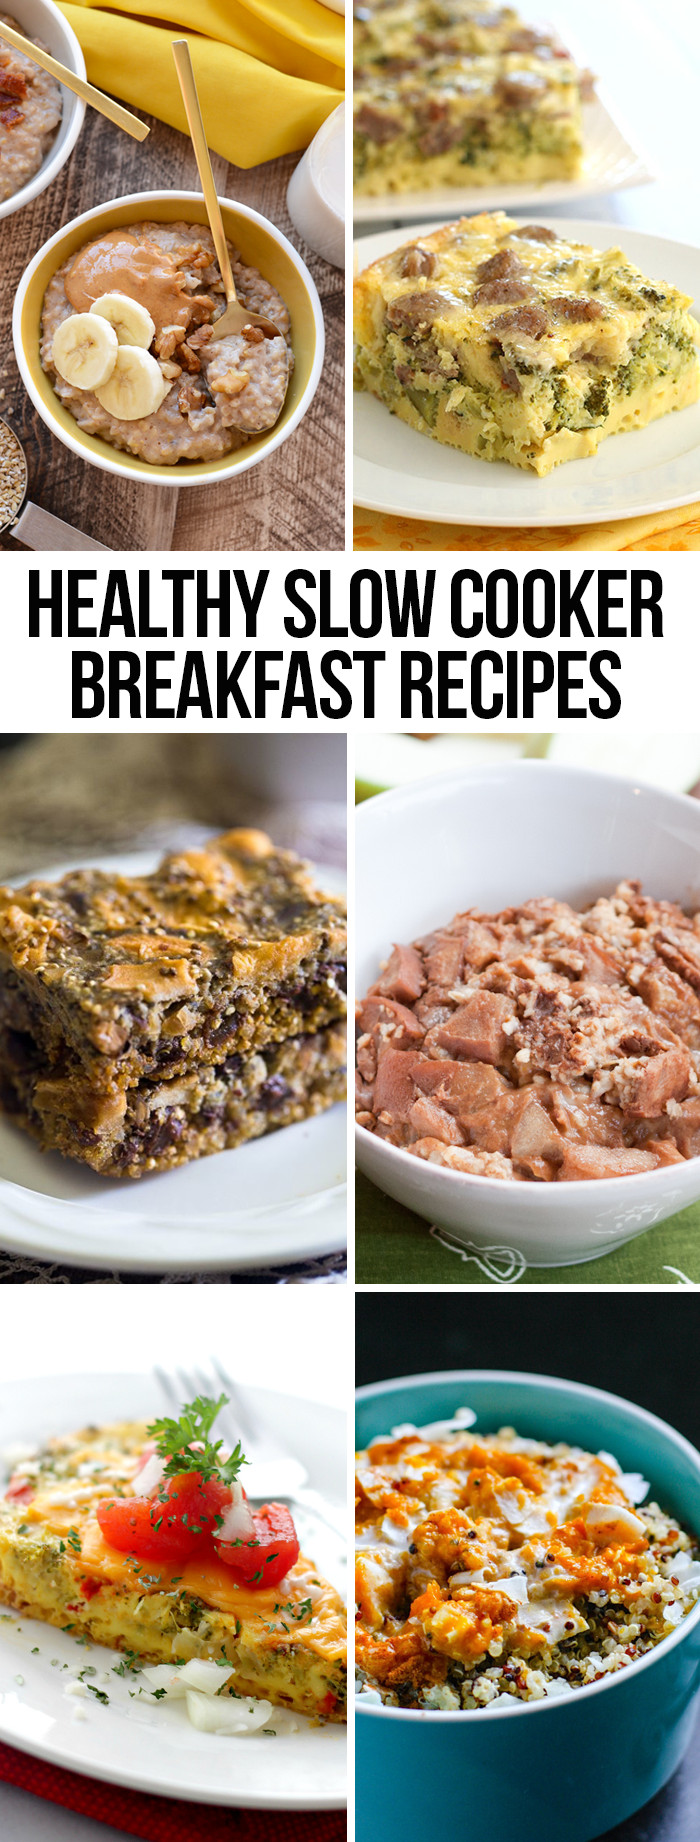 Healthy Diet Breakfast Recipes
 Healthy Slow Cooker Breakfast Recipes